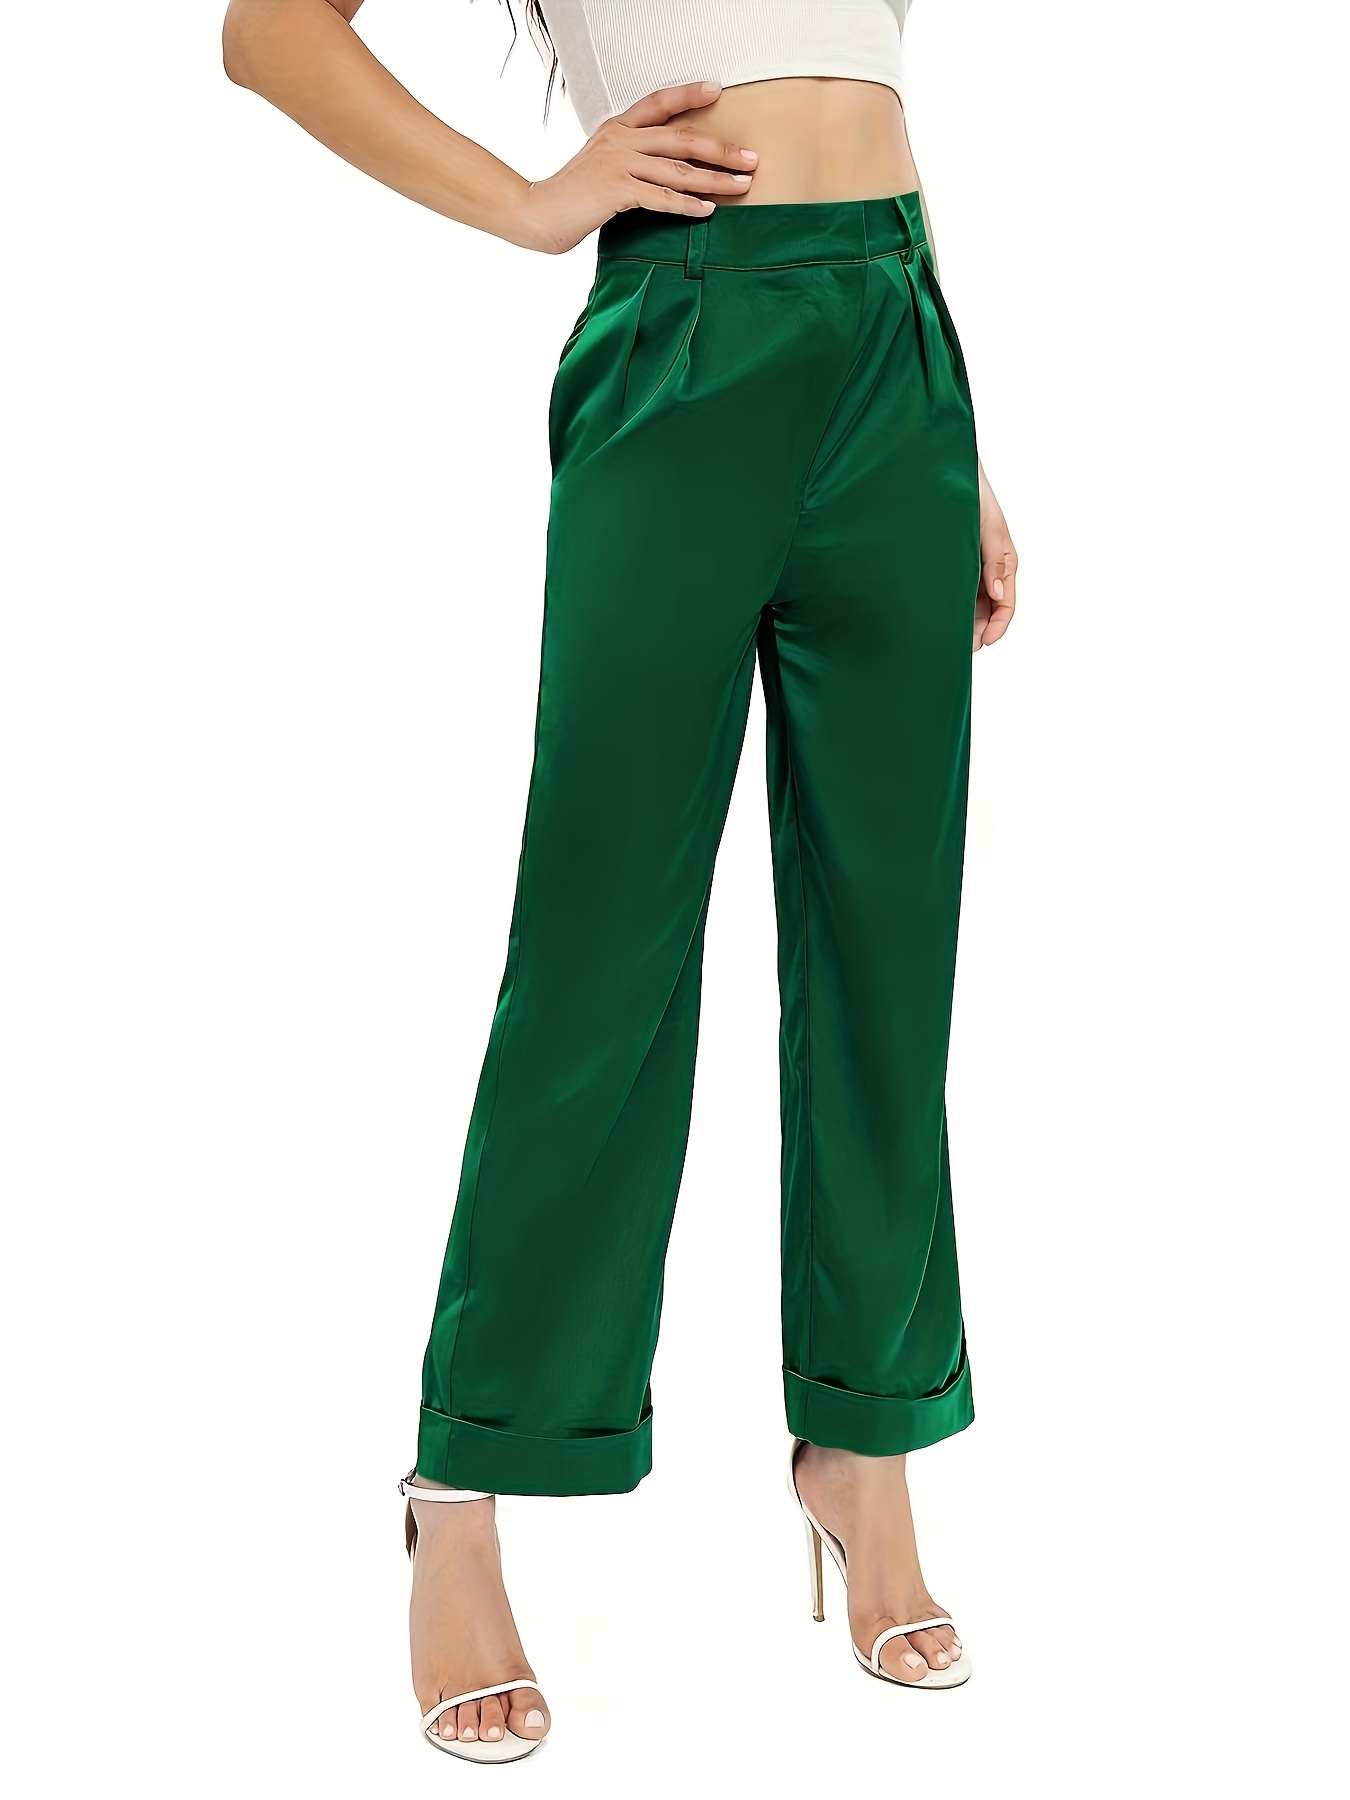 Women's Clothing - Satin Wide Leg Track Pants - Green